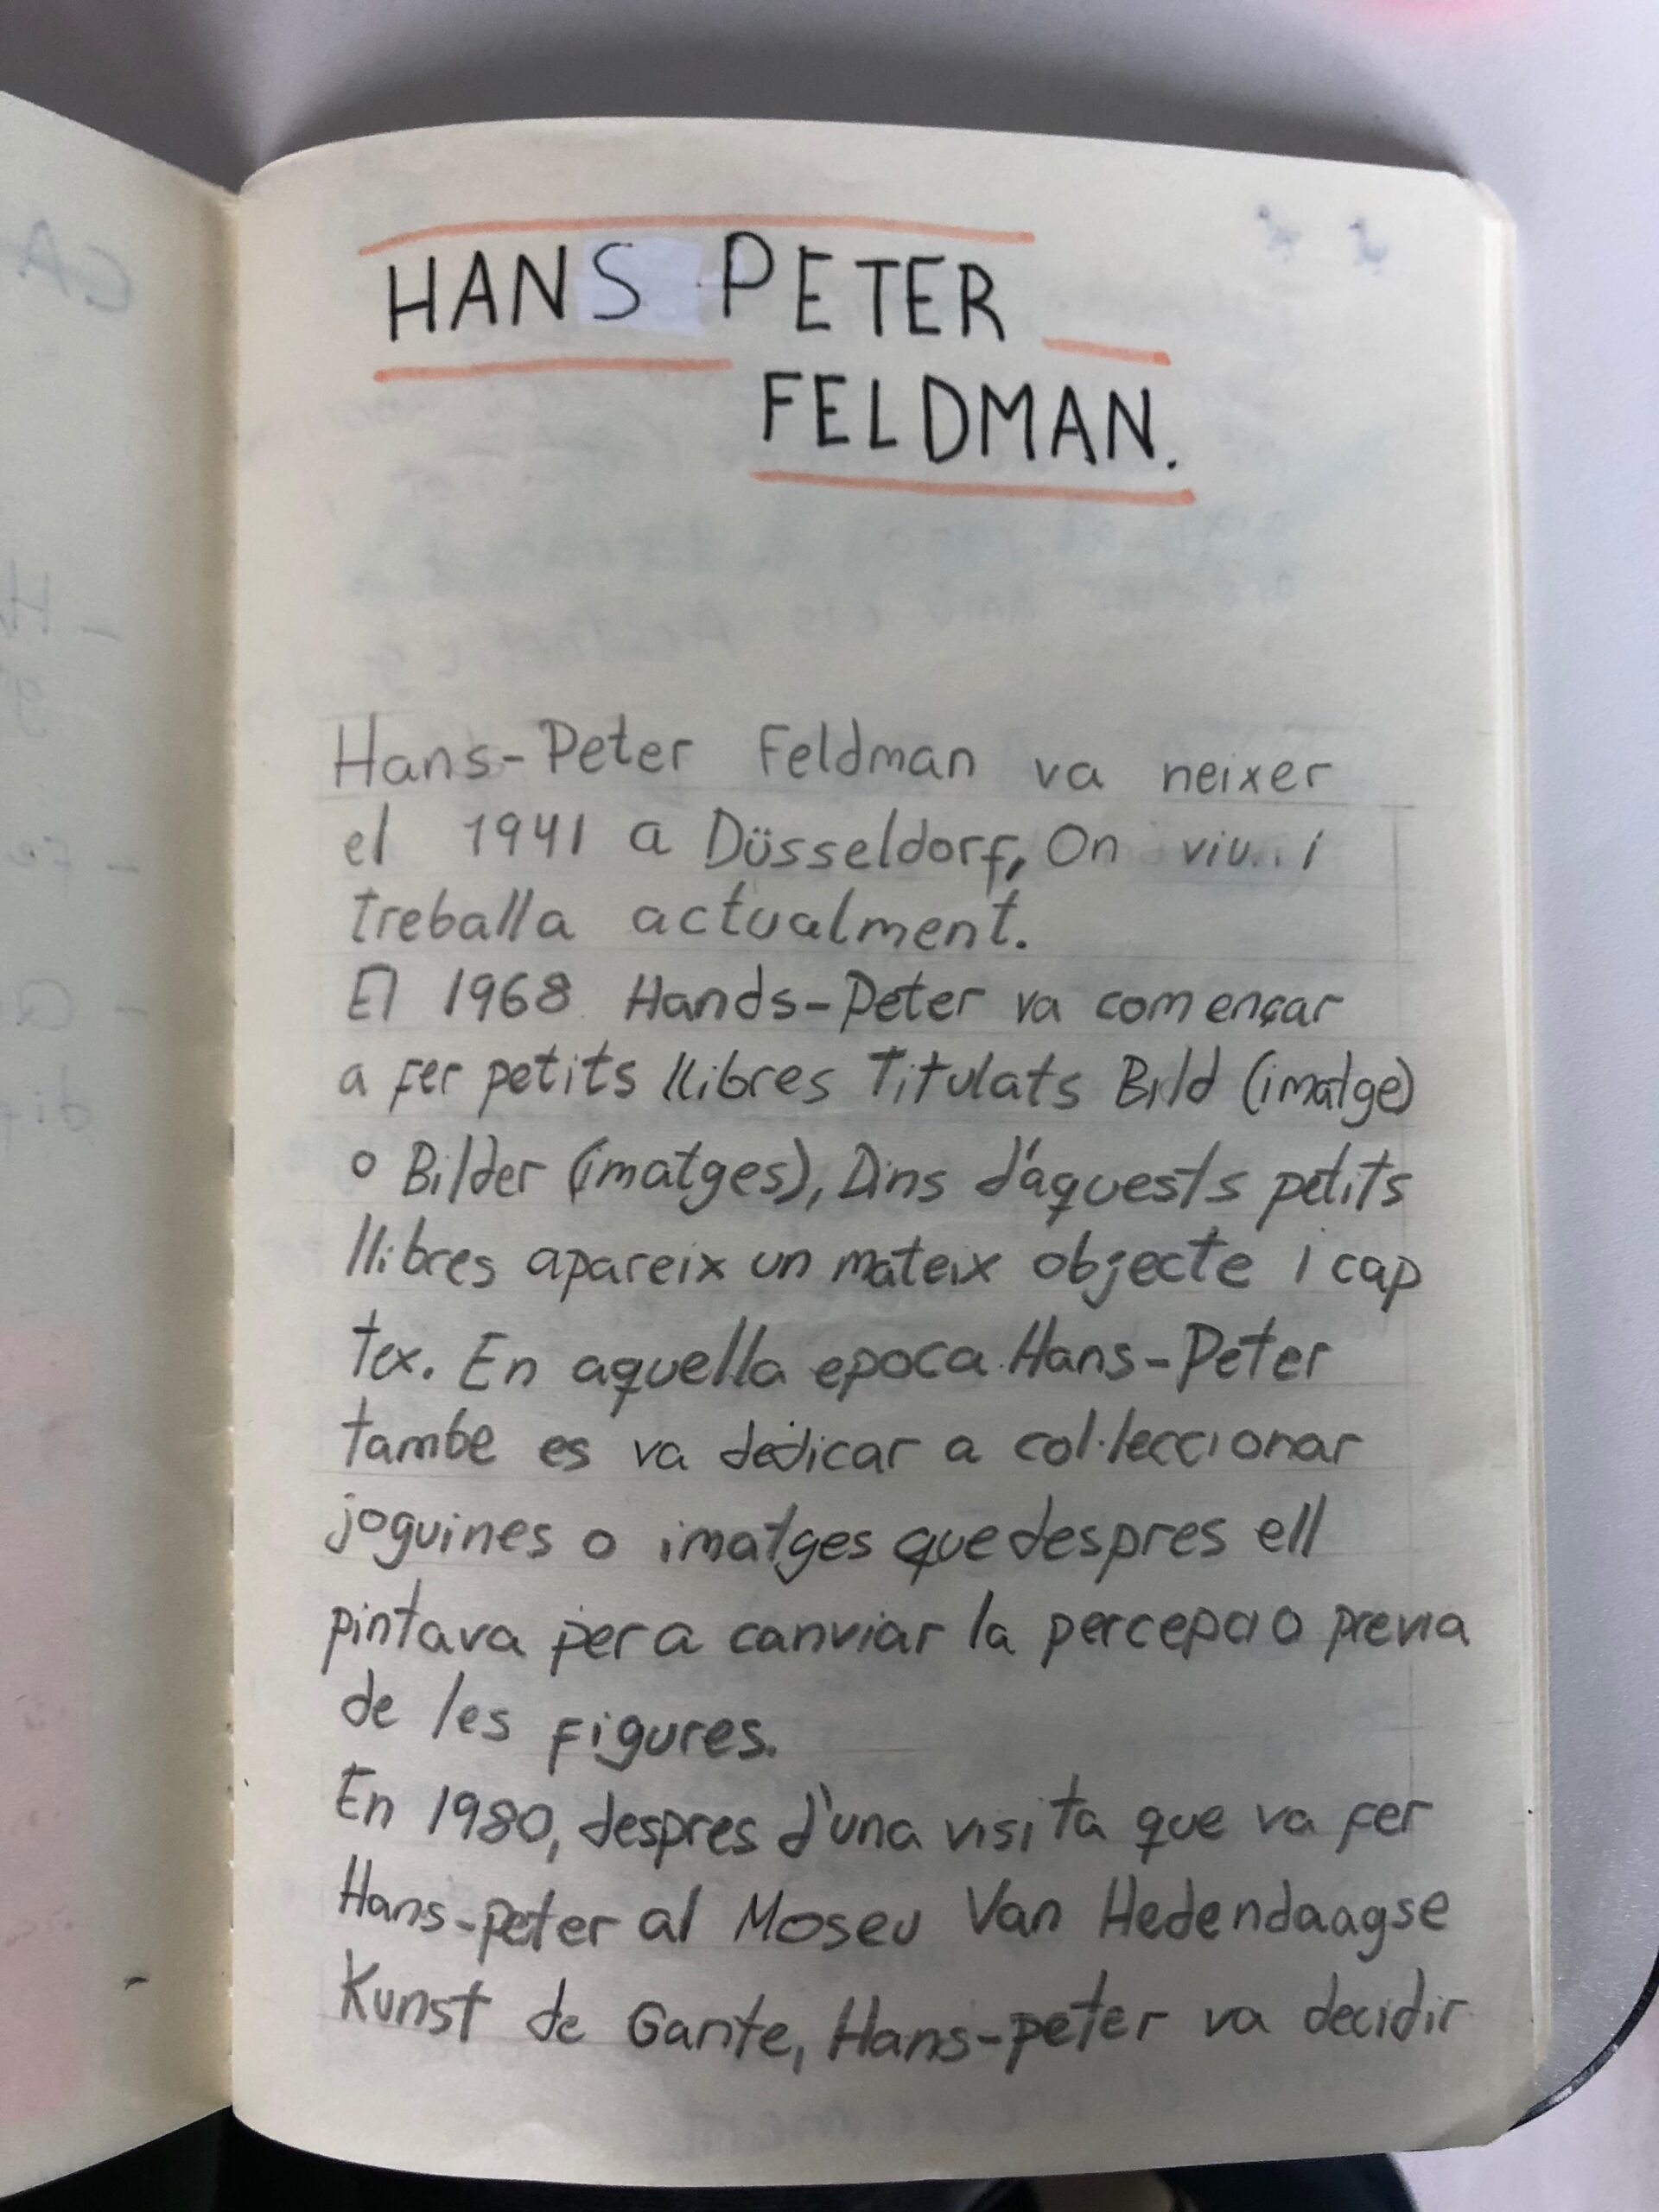 Hans Peter Feldman, l'artista referent